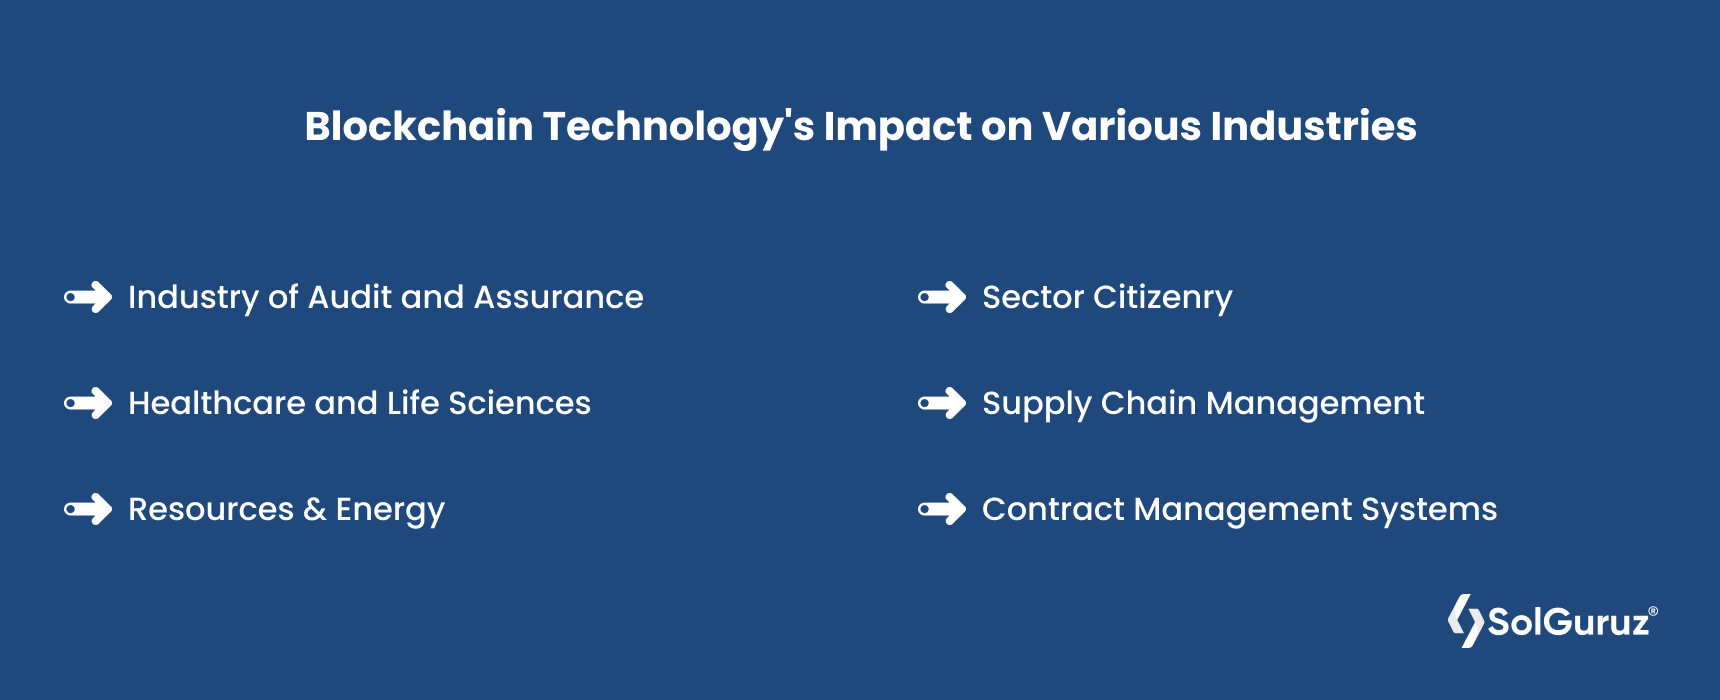 Blockchain Technology's Impact on Various Industries